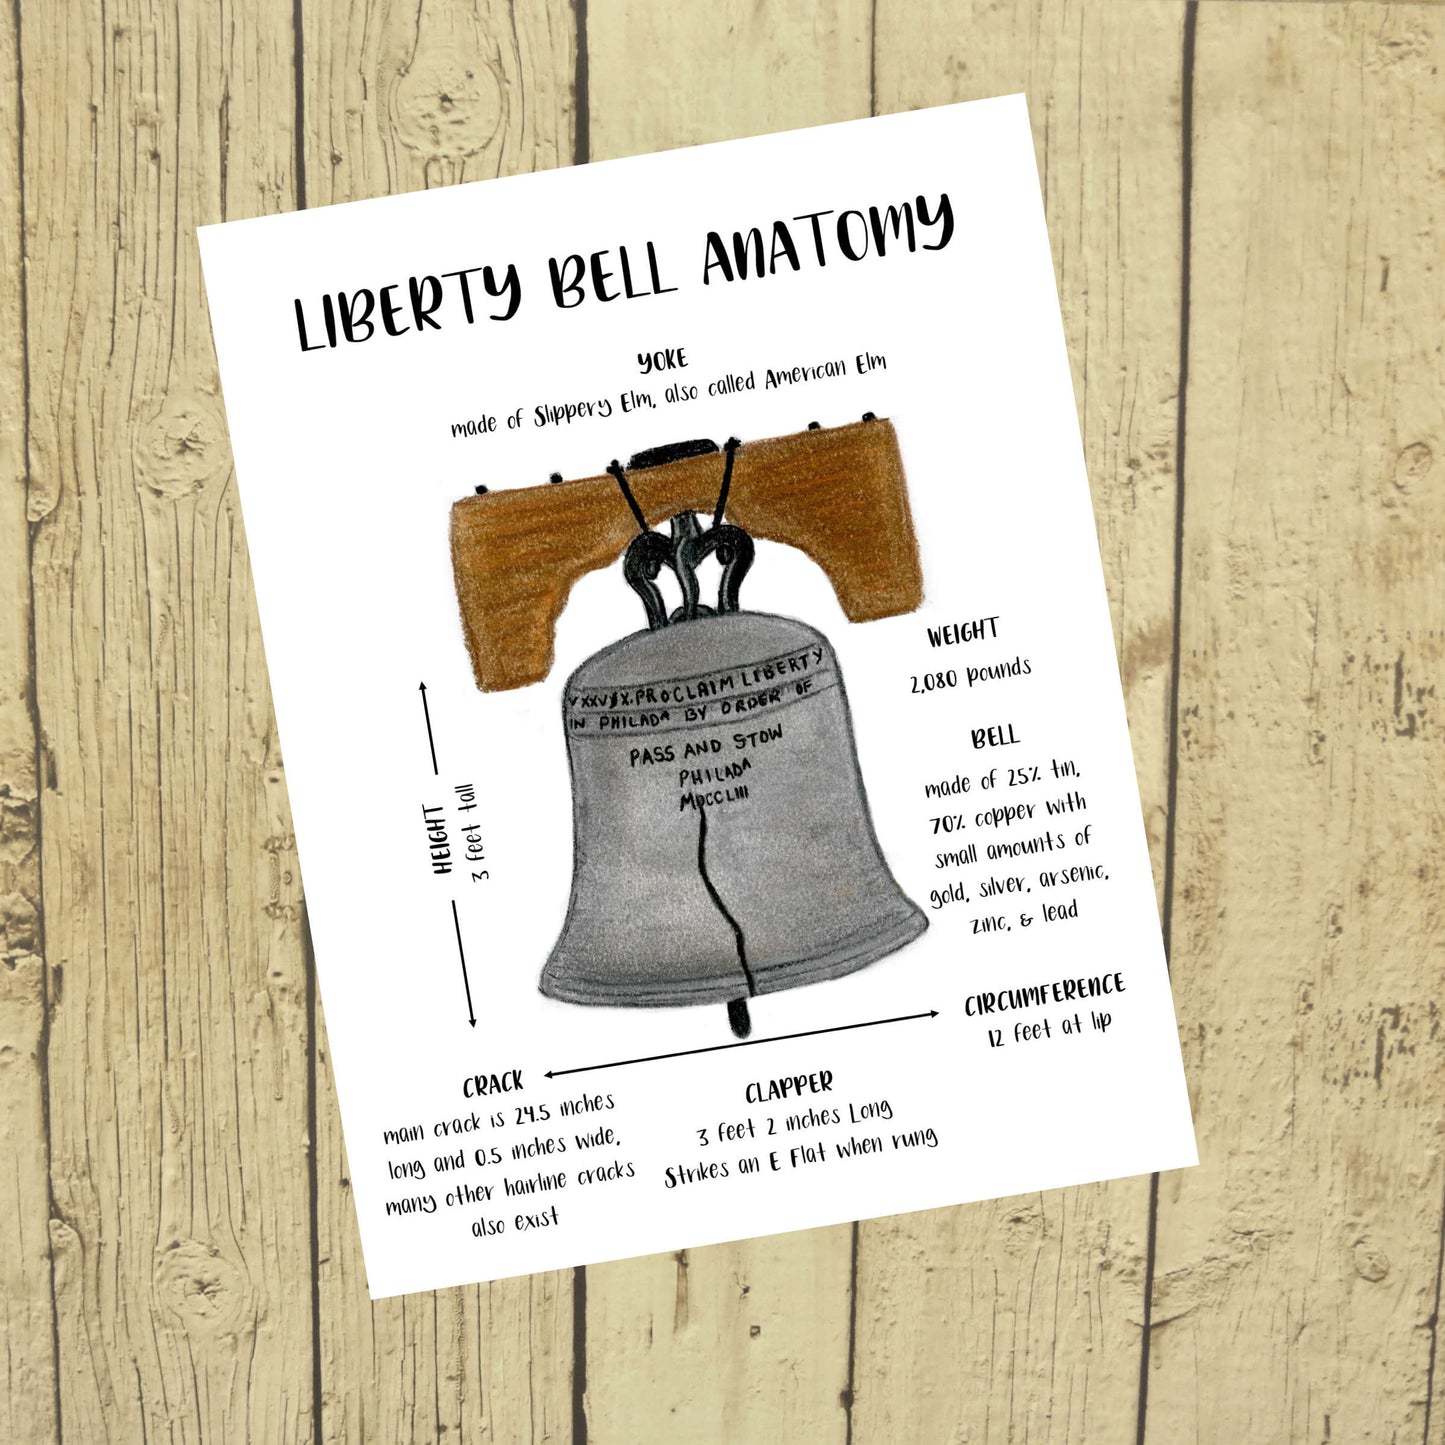 Liberty Bell Anatomy Poster